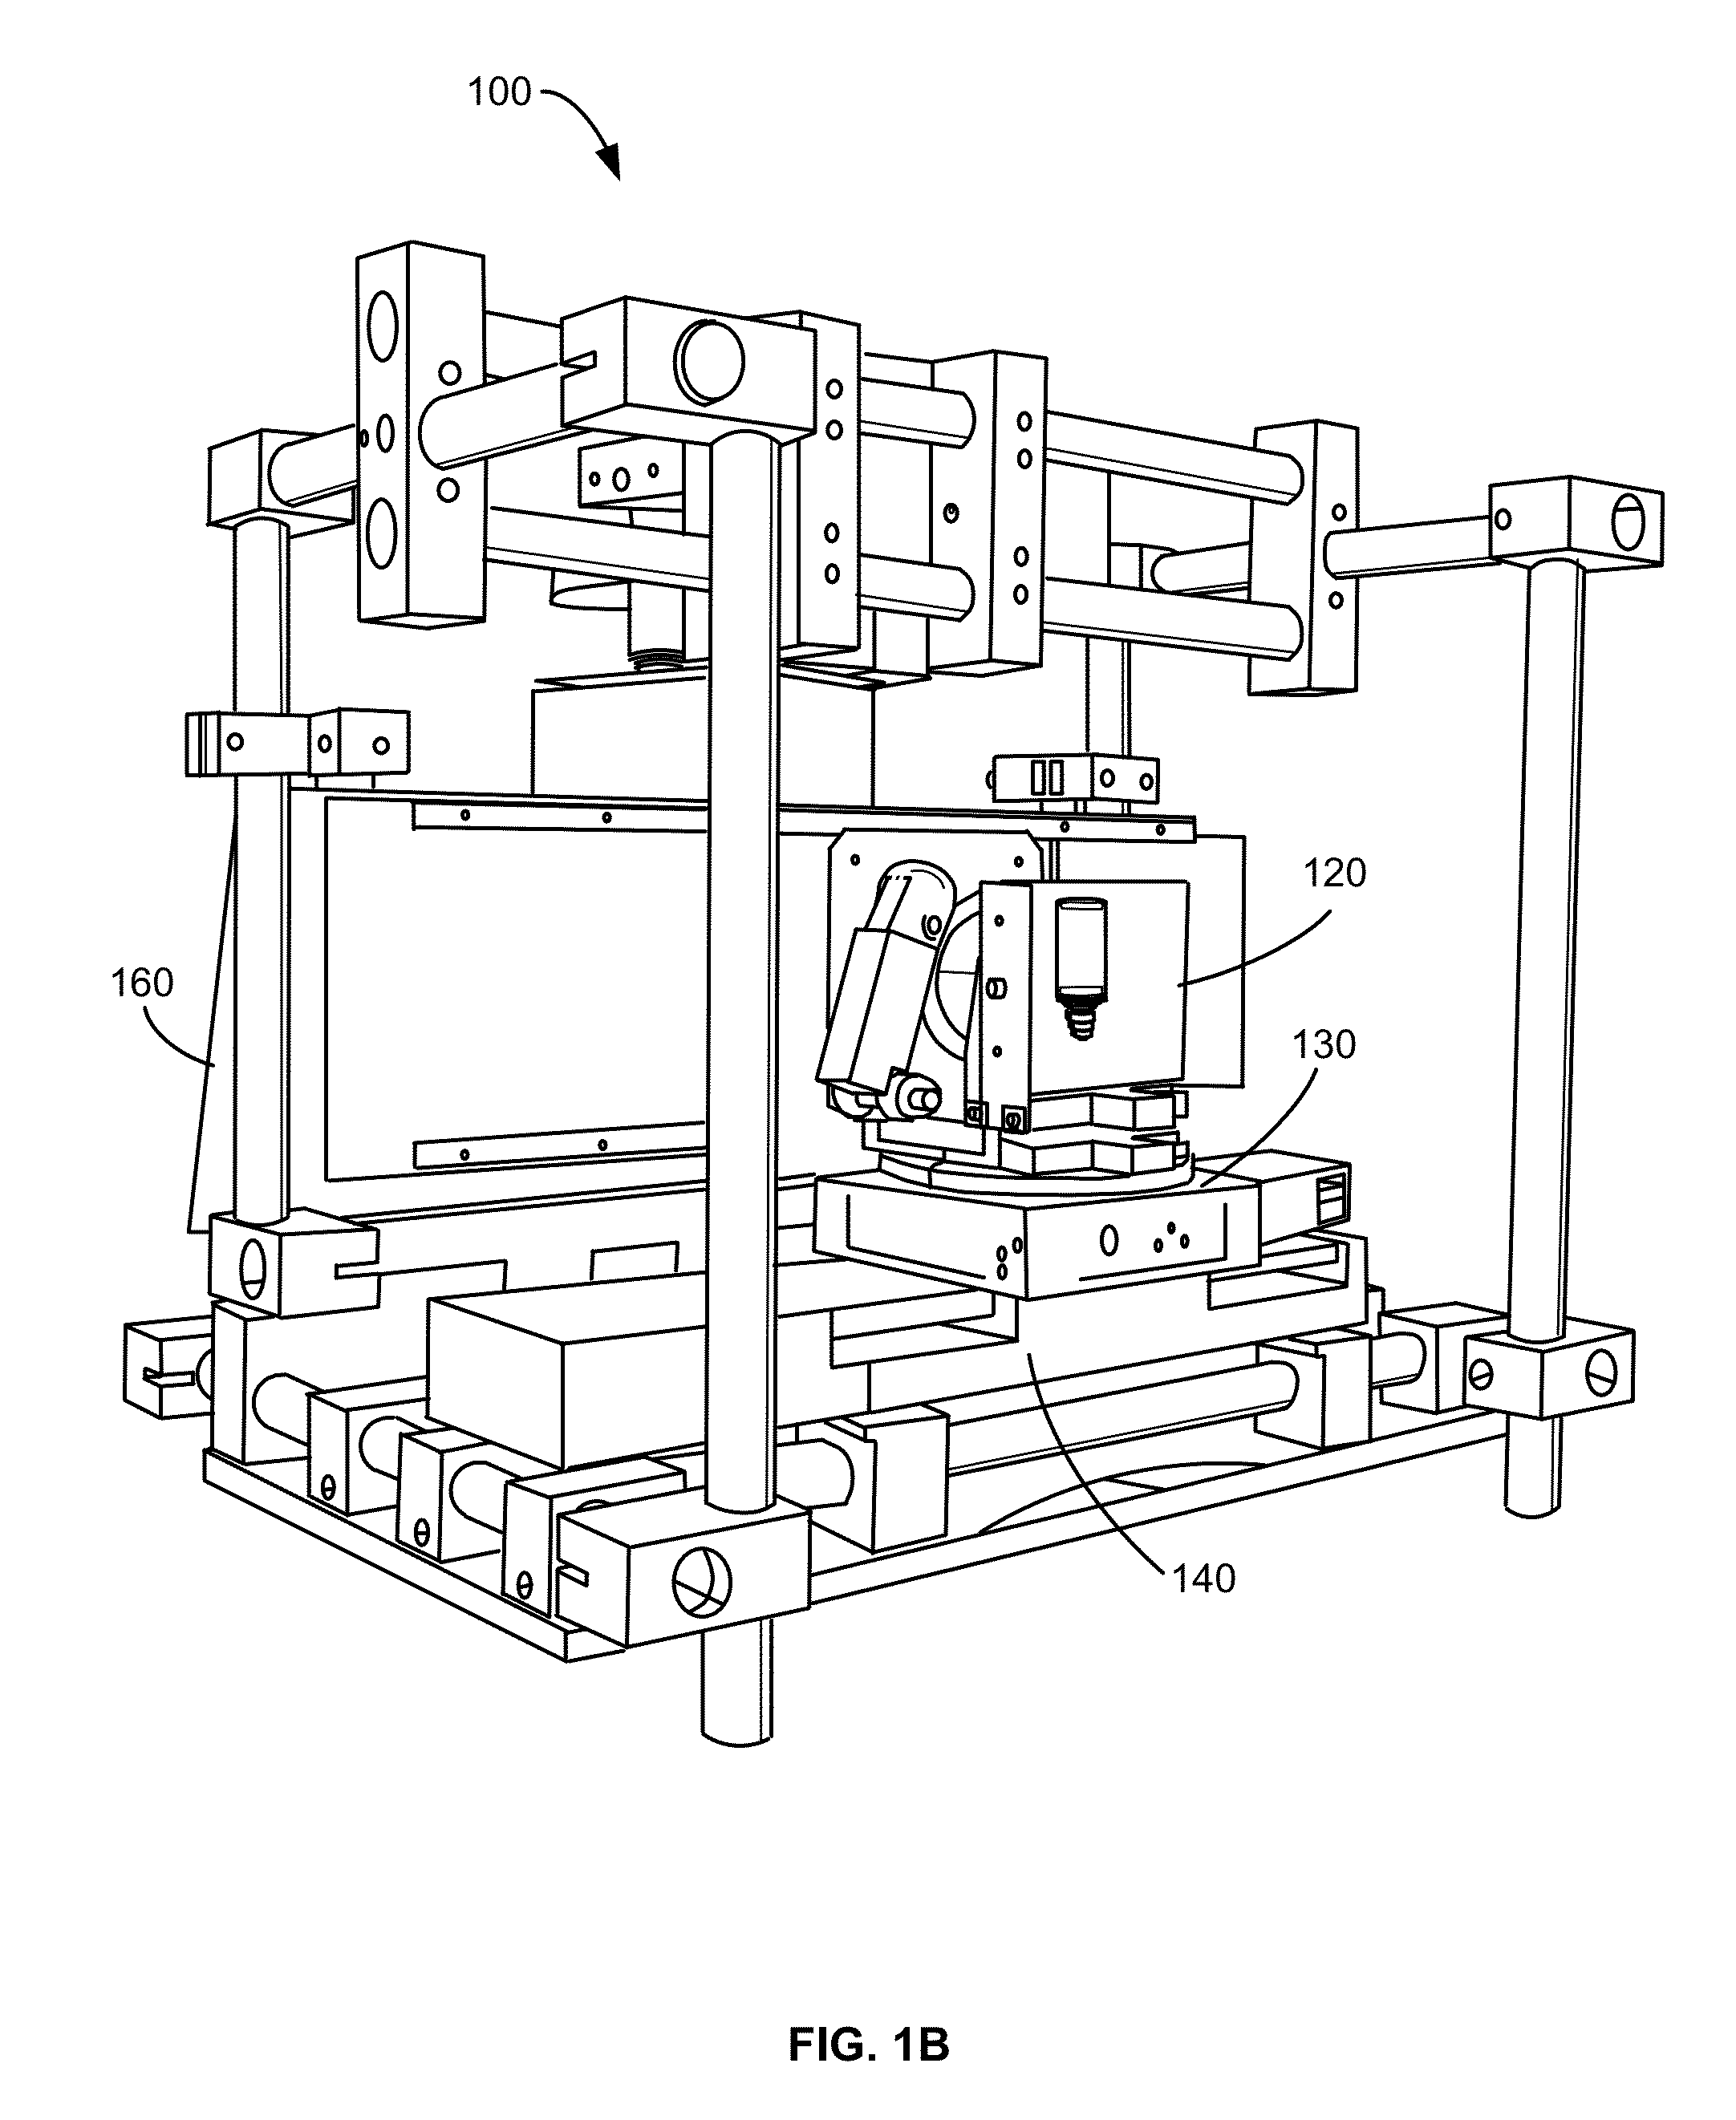 Computational stereoscopic camera system